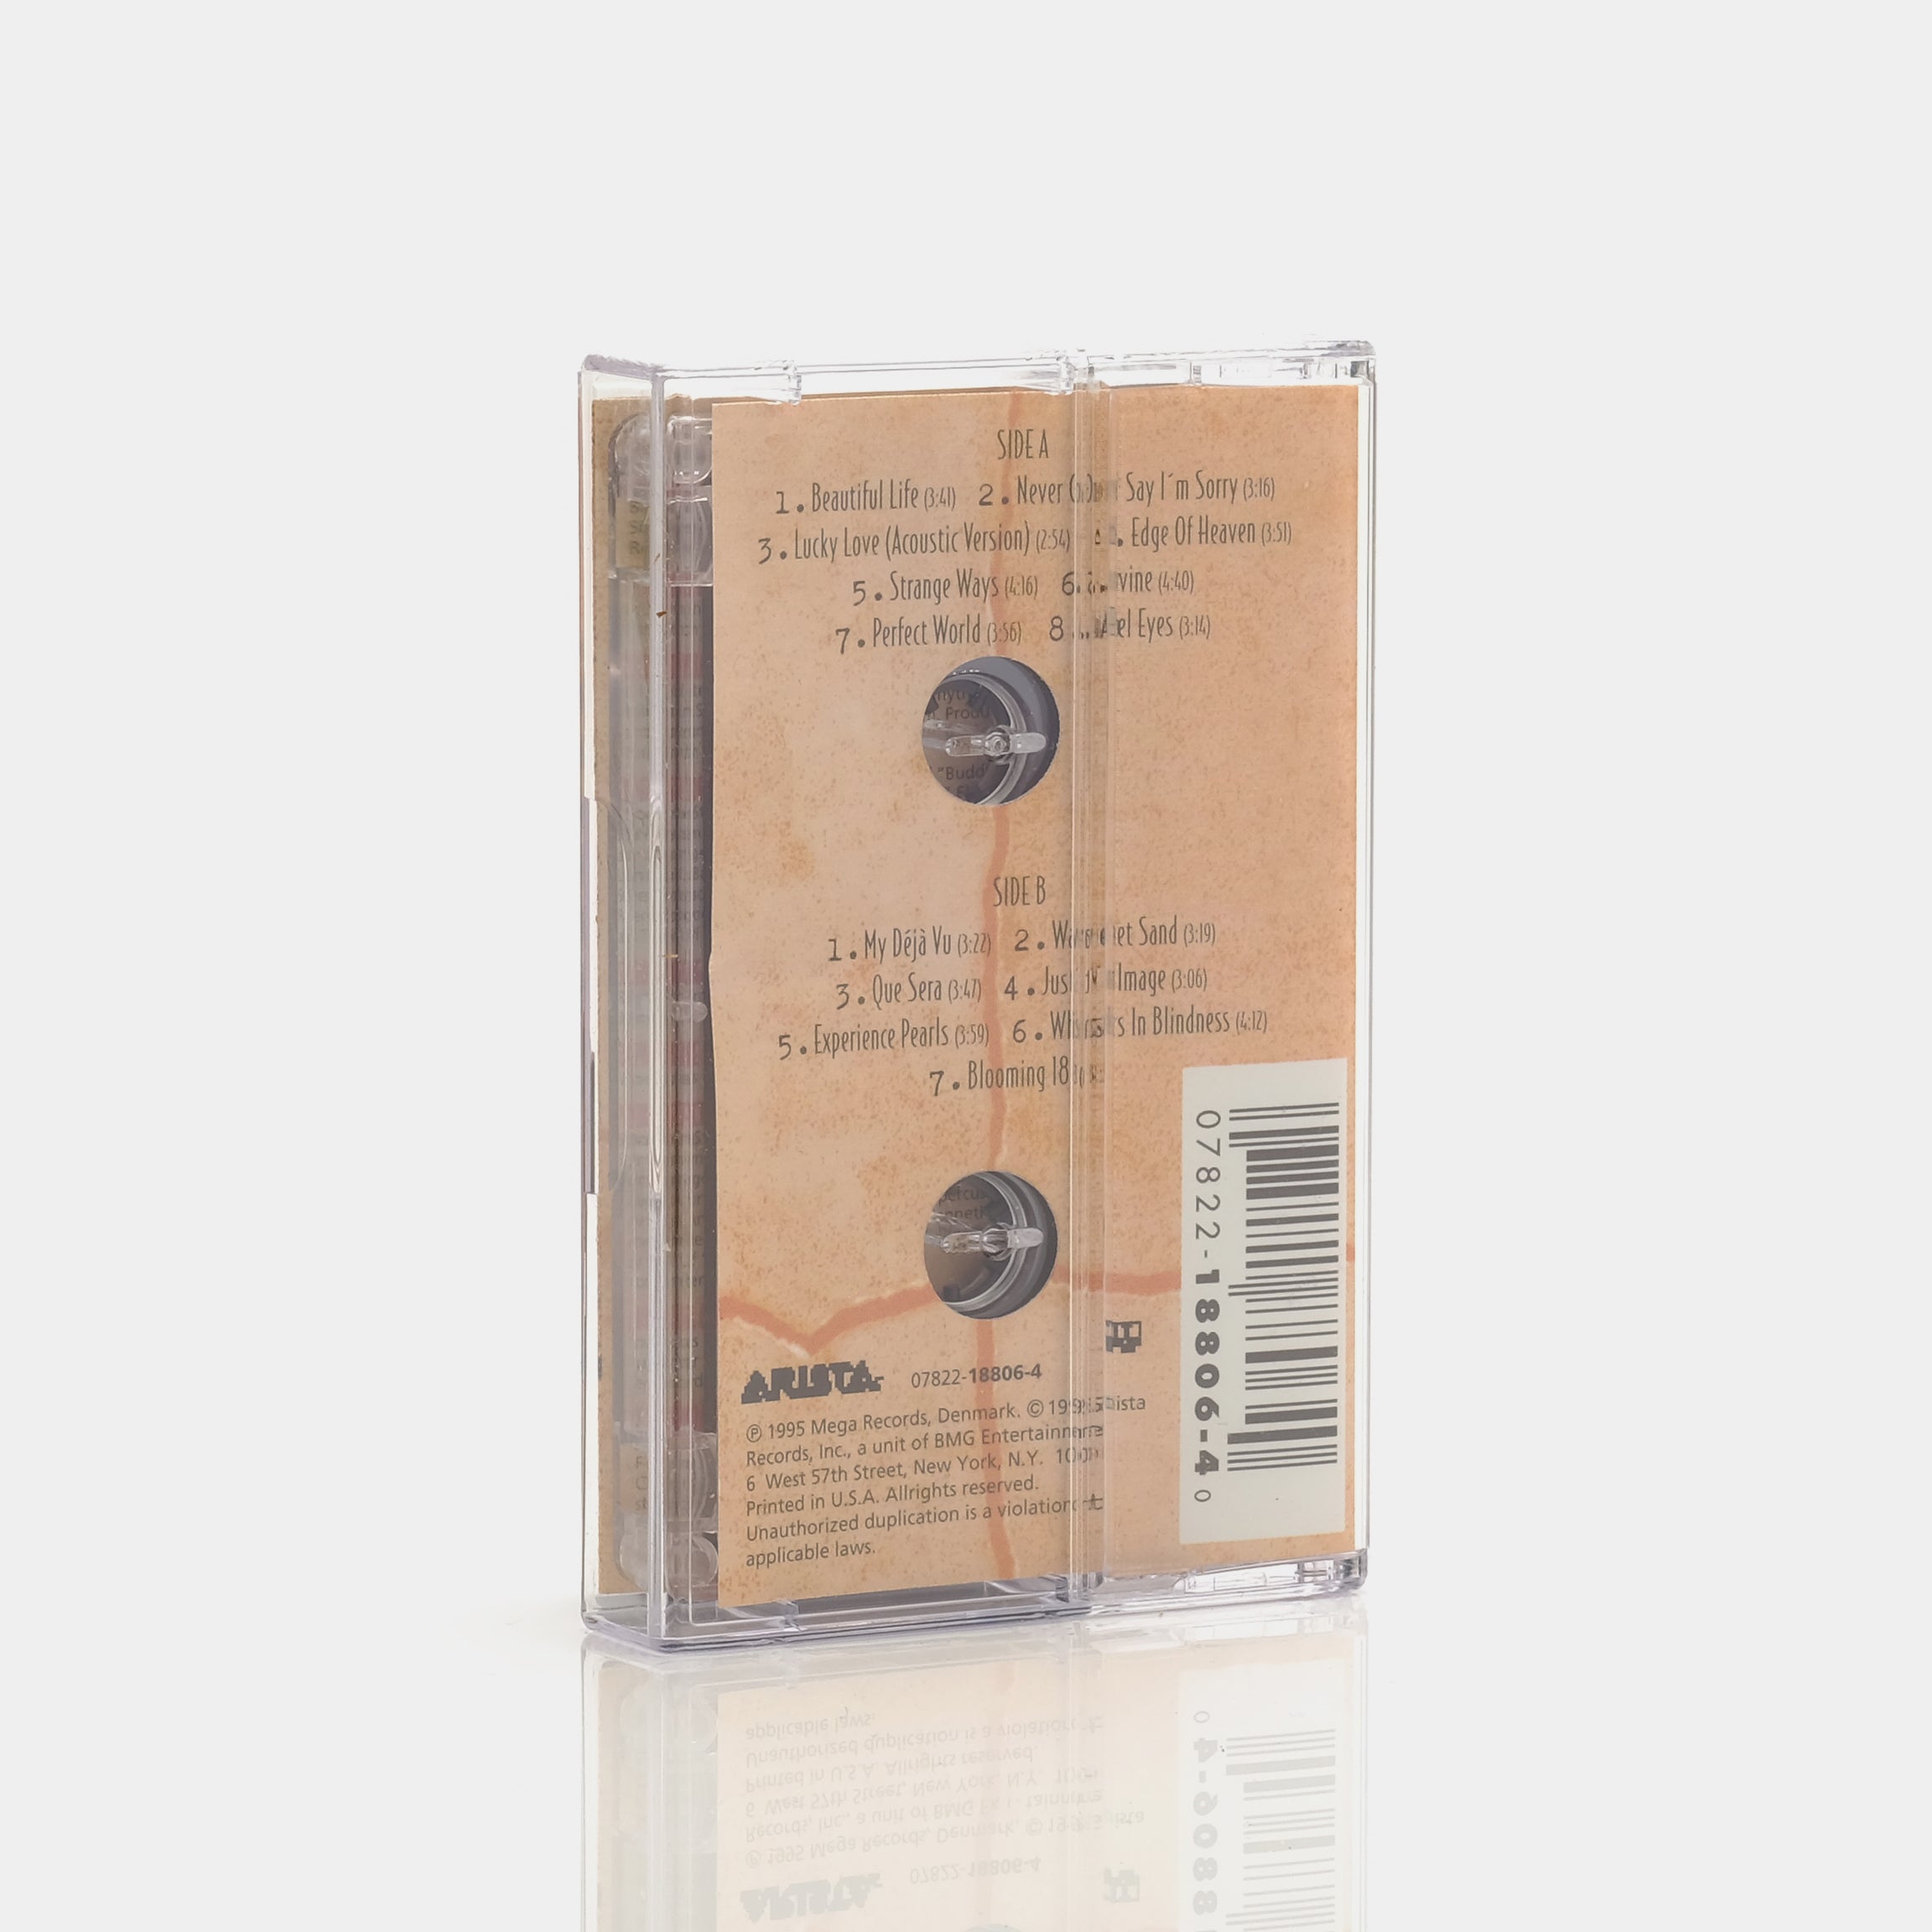 Ace Of Base - The Bridge Cassette Tape